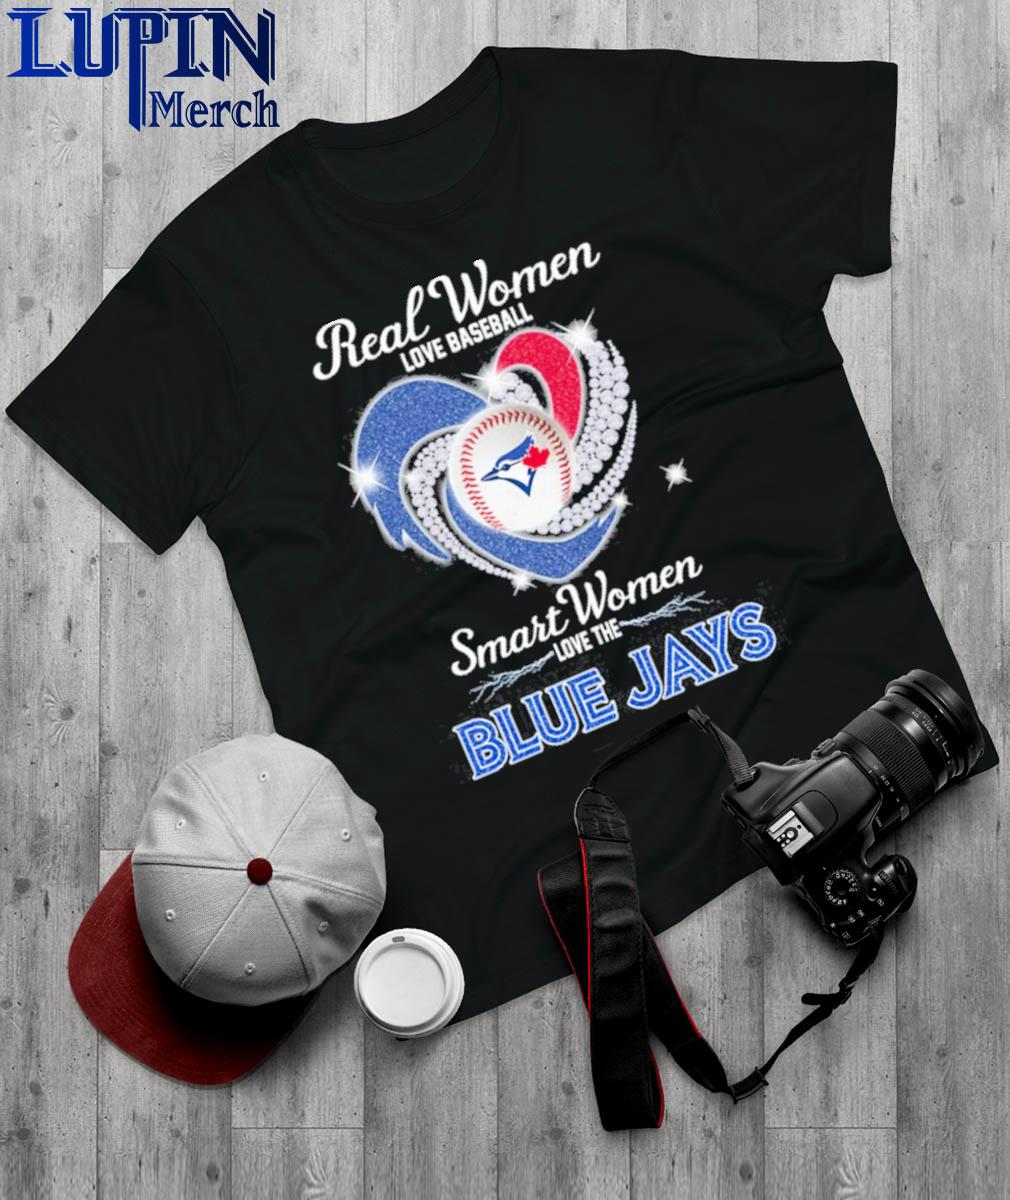 Real women love baseball smart women love the Blue Jays heart logo shirt,  hoodie, sweater, long sleeve and tank top